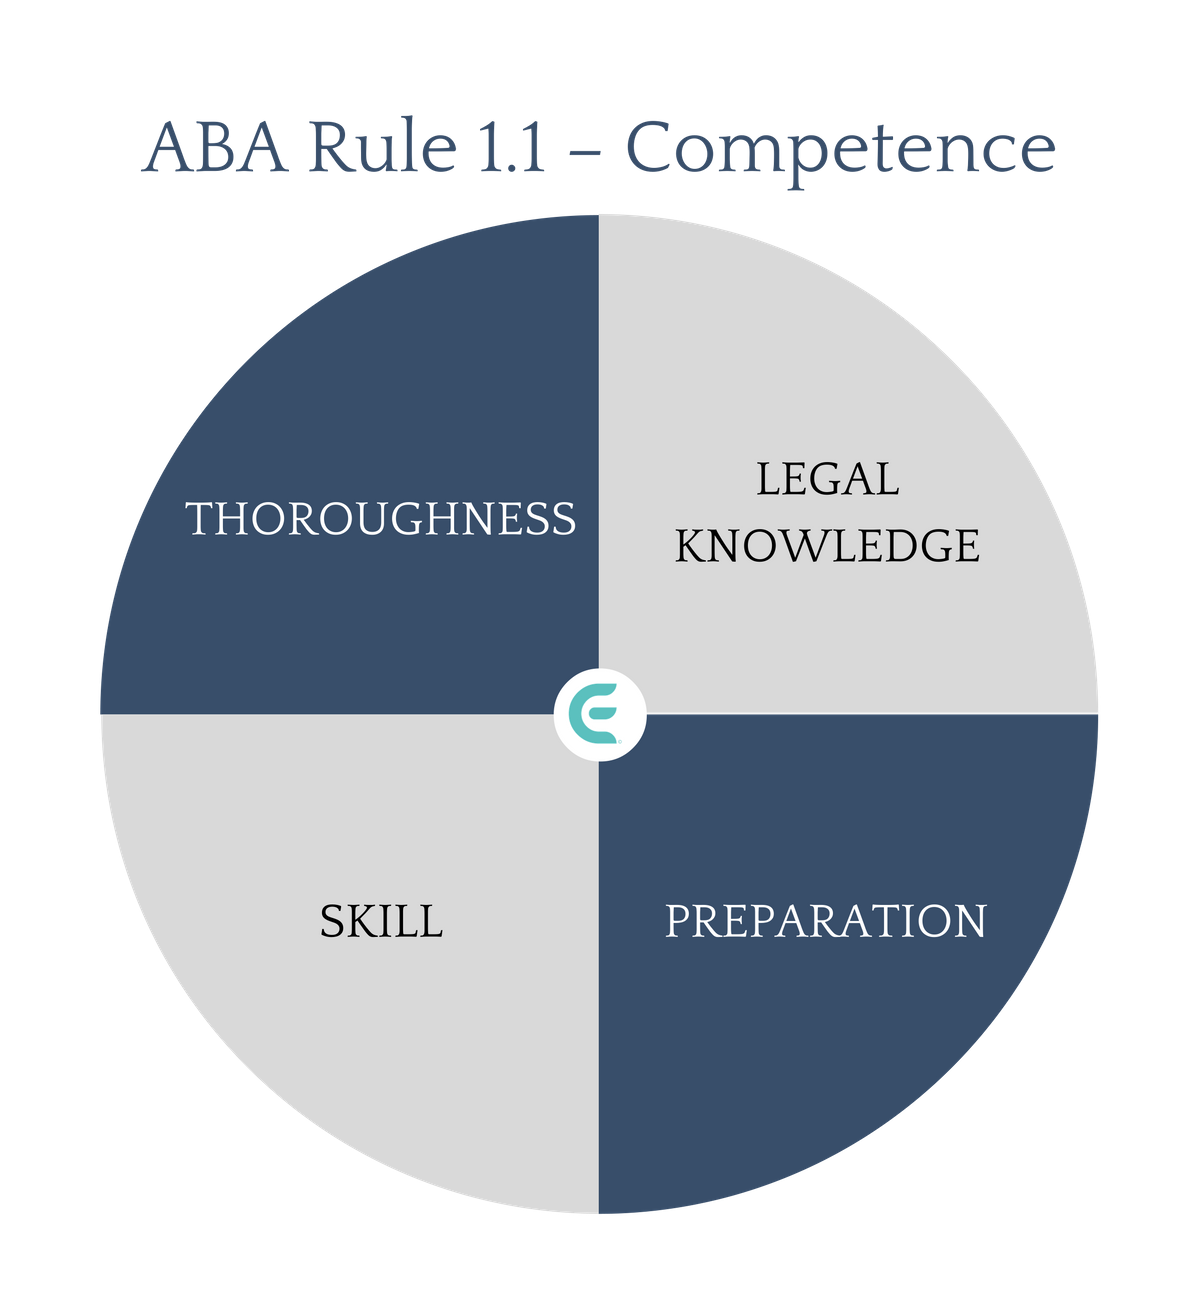 ABA Rule 1.1 – Competence